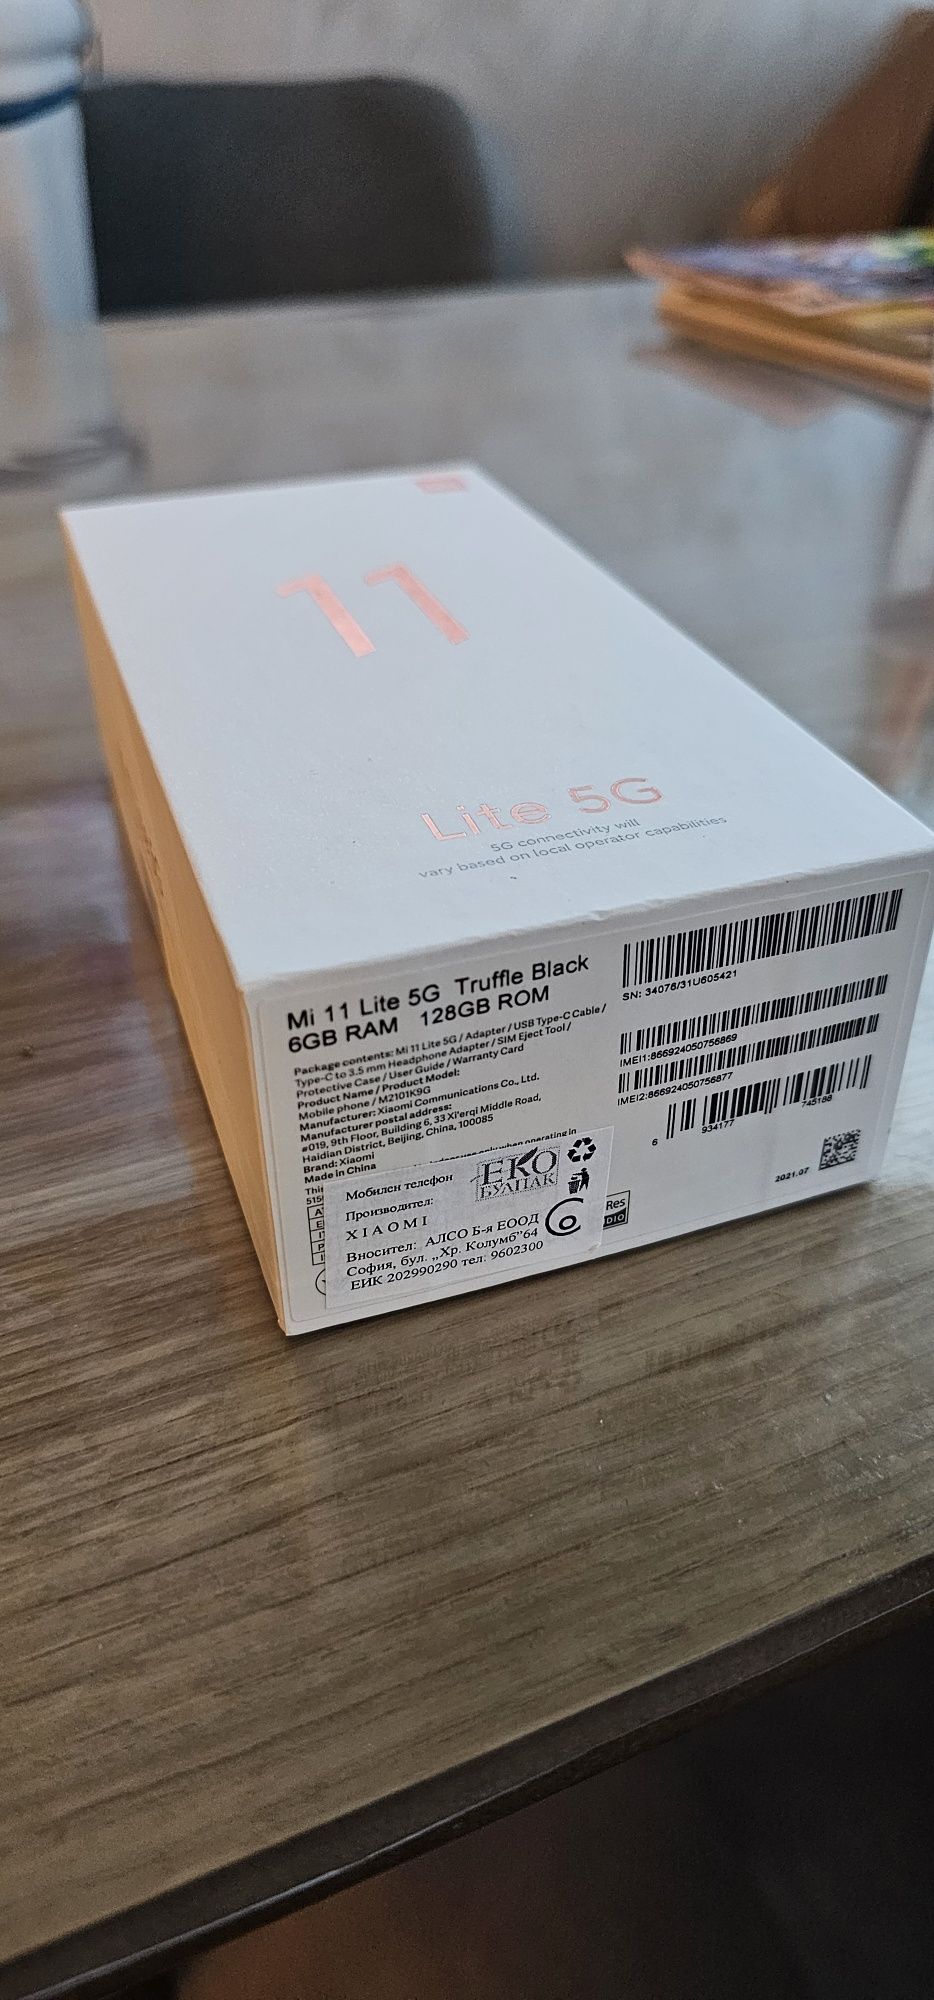 Xiaomi Mi 11 Lite 5G - Truffle black